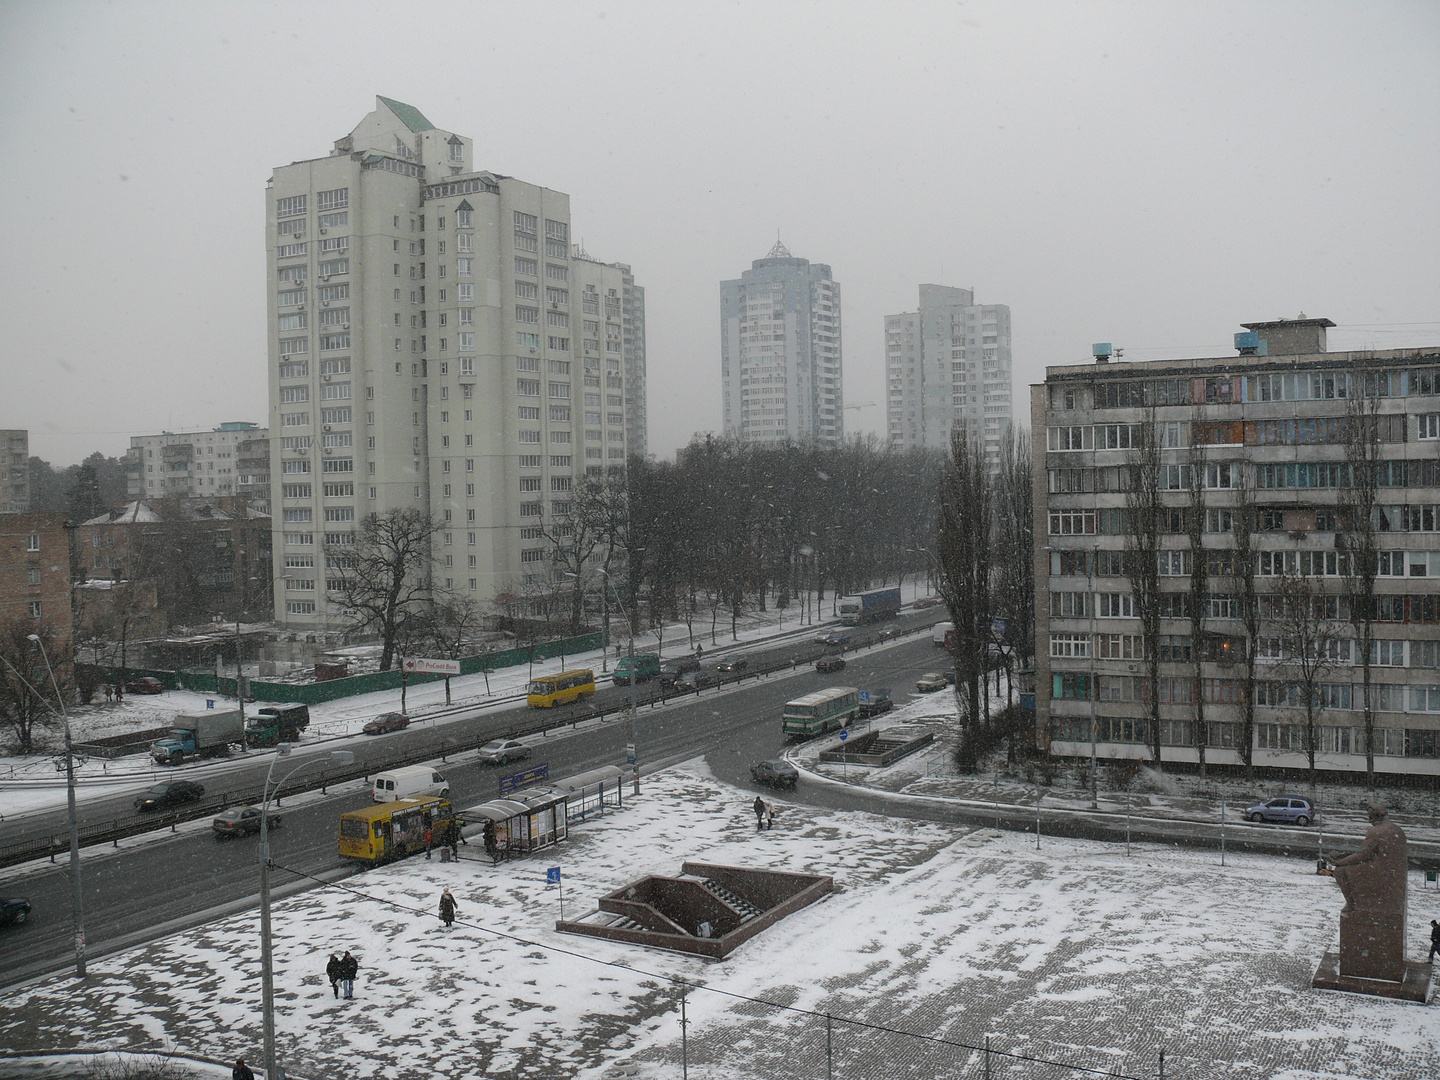 Wintertag in Kiew